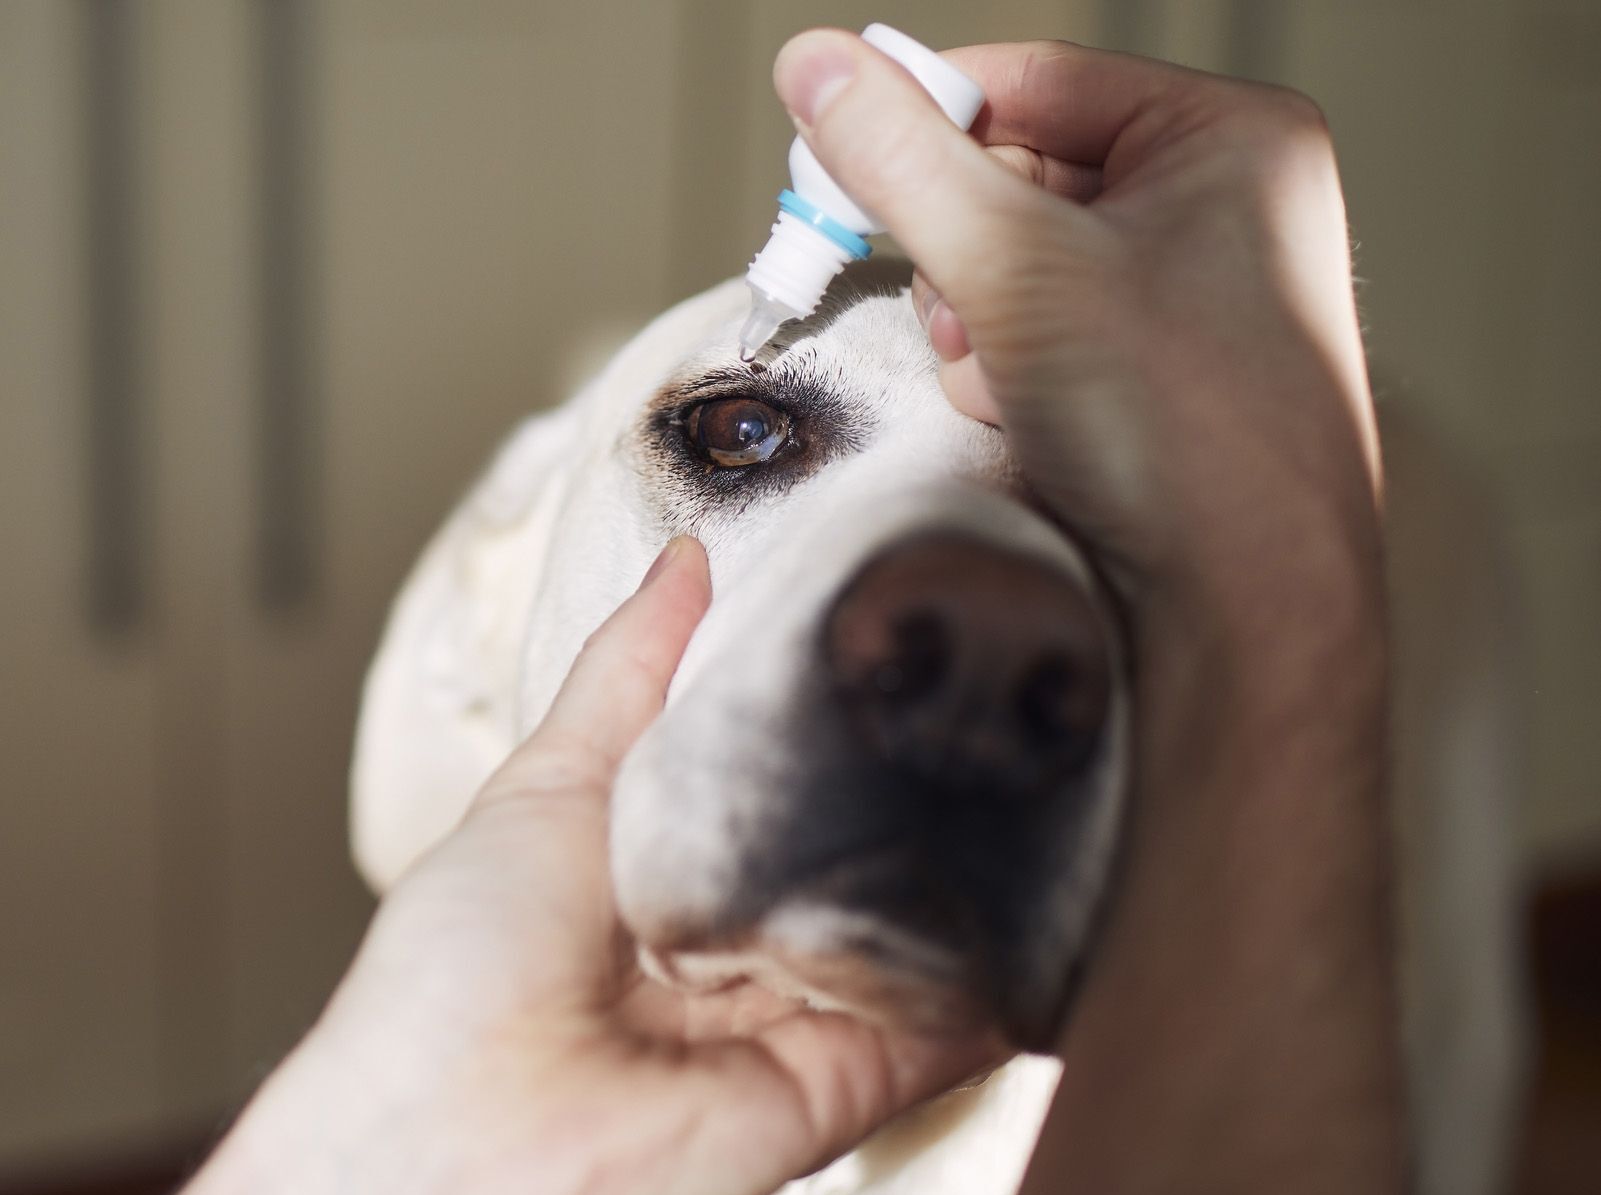 Applying Genteal Eye Gel To Dogs - How Long Do I Wait To Then Put Eye Drops?